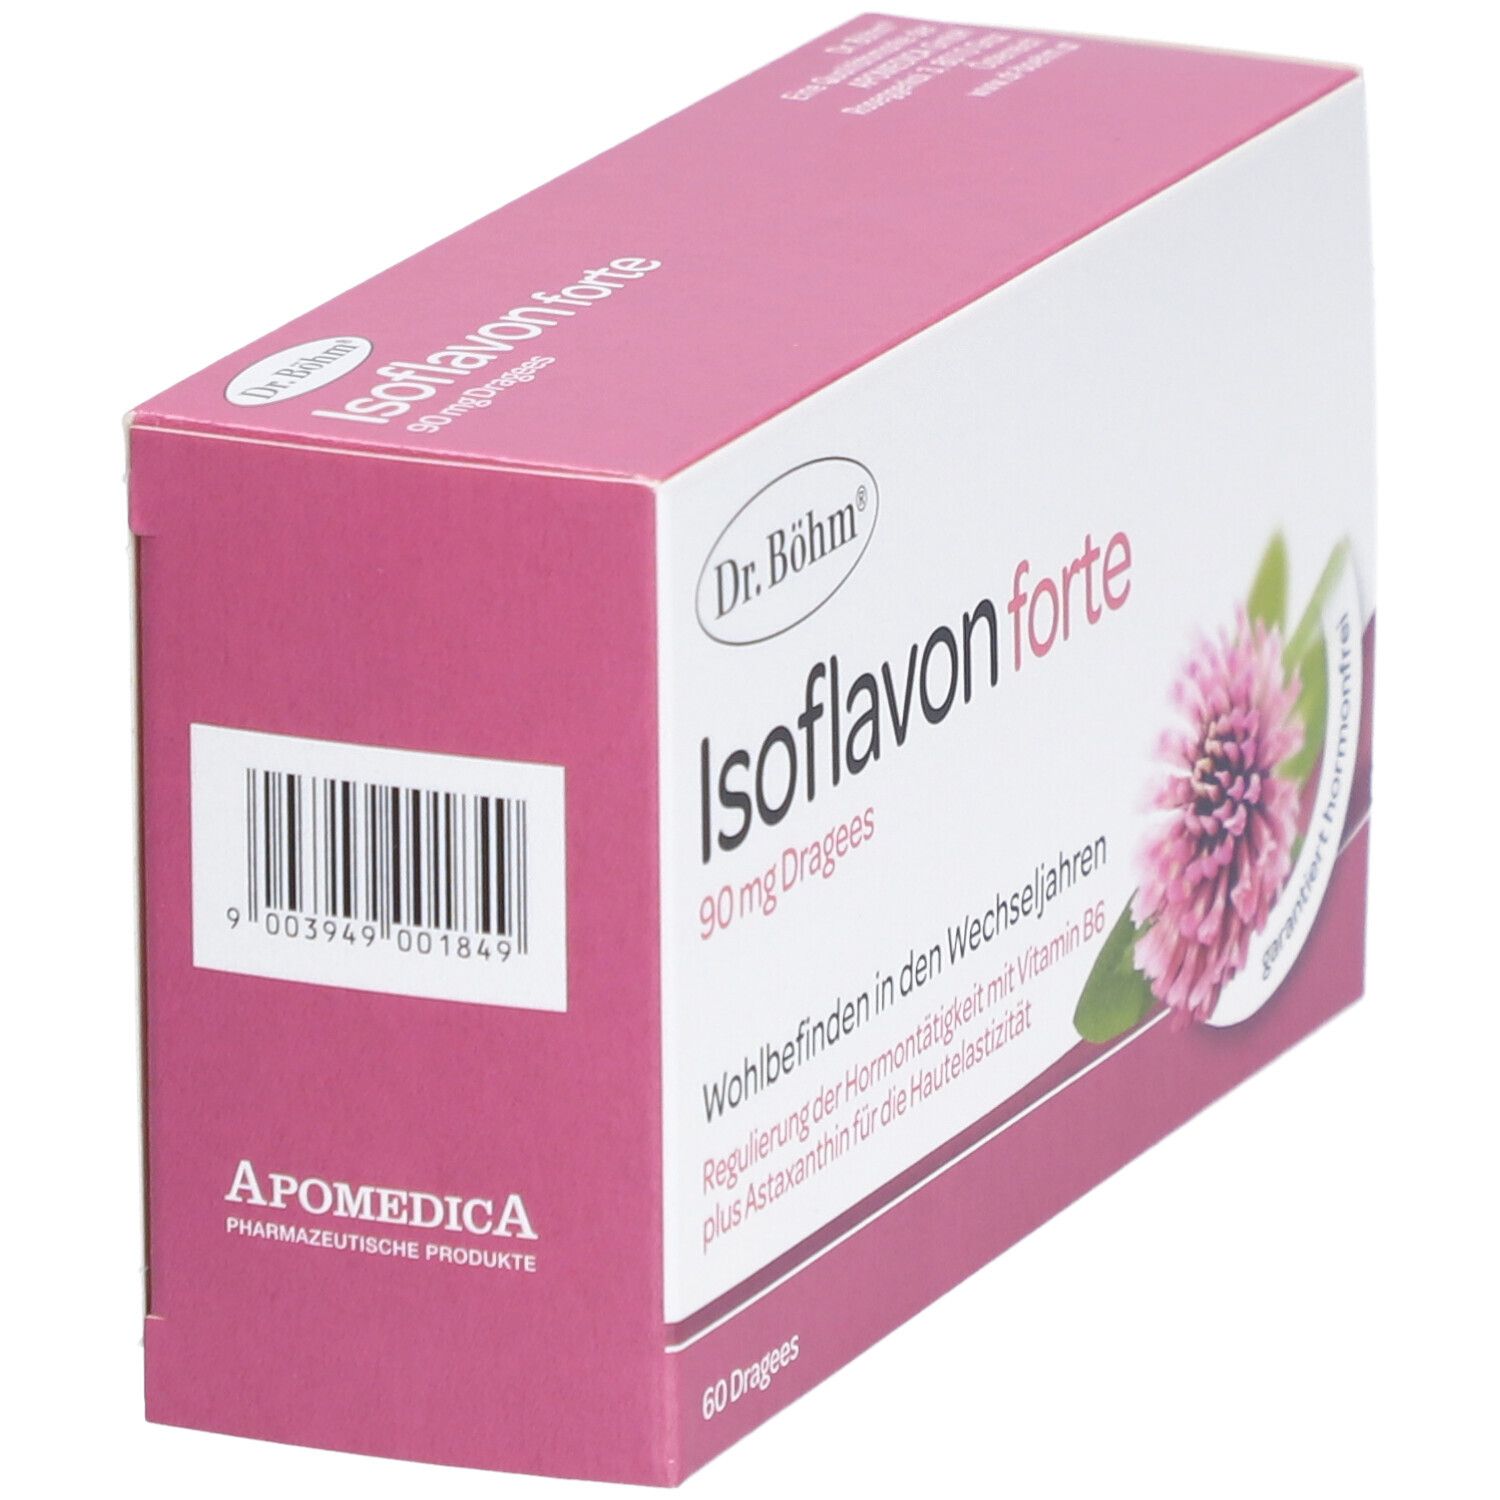 Dr. Böhm® Isoflavon 90 mg forte